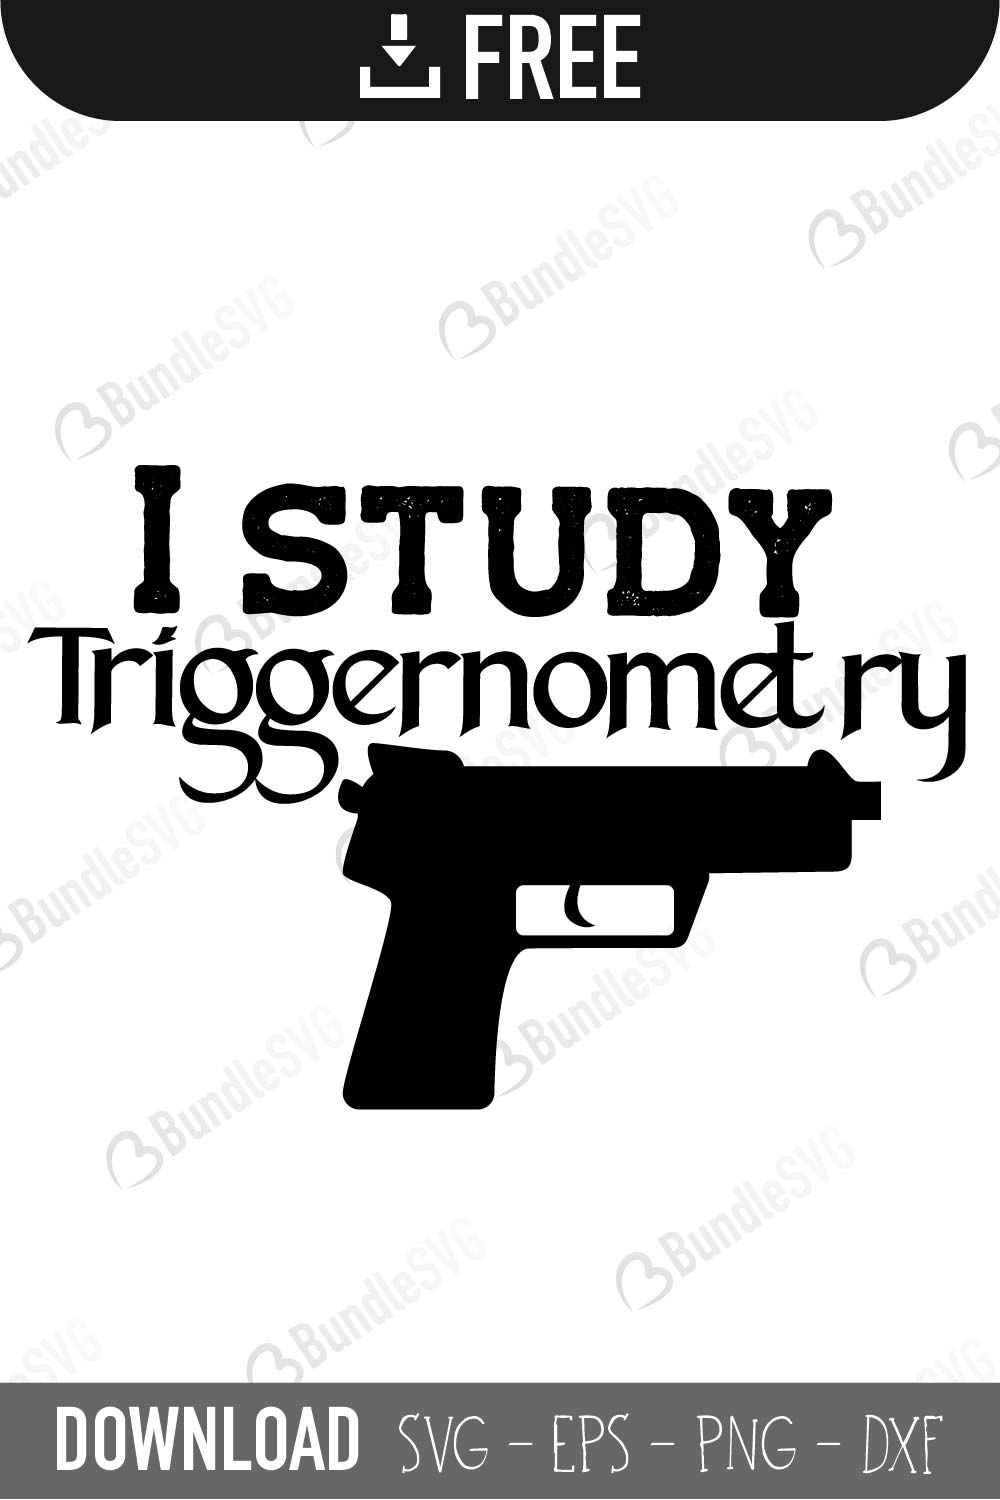 Download I Study Triggernometry SVG Cut Files Free Download | BundleSVG